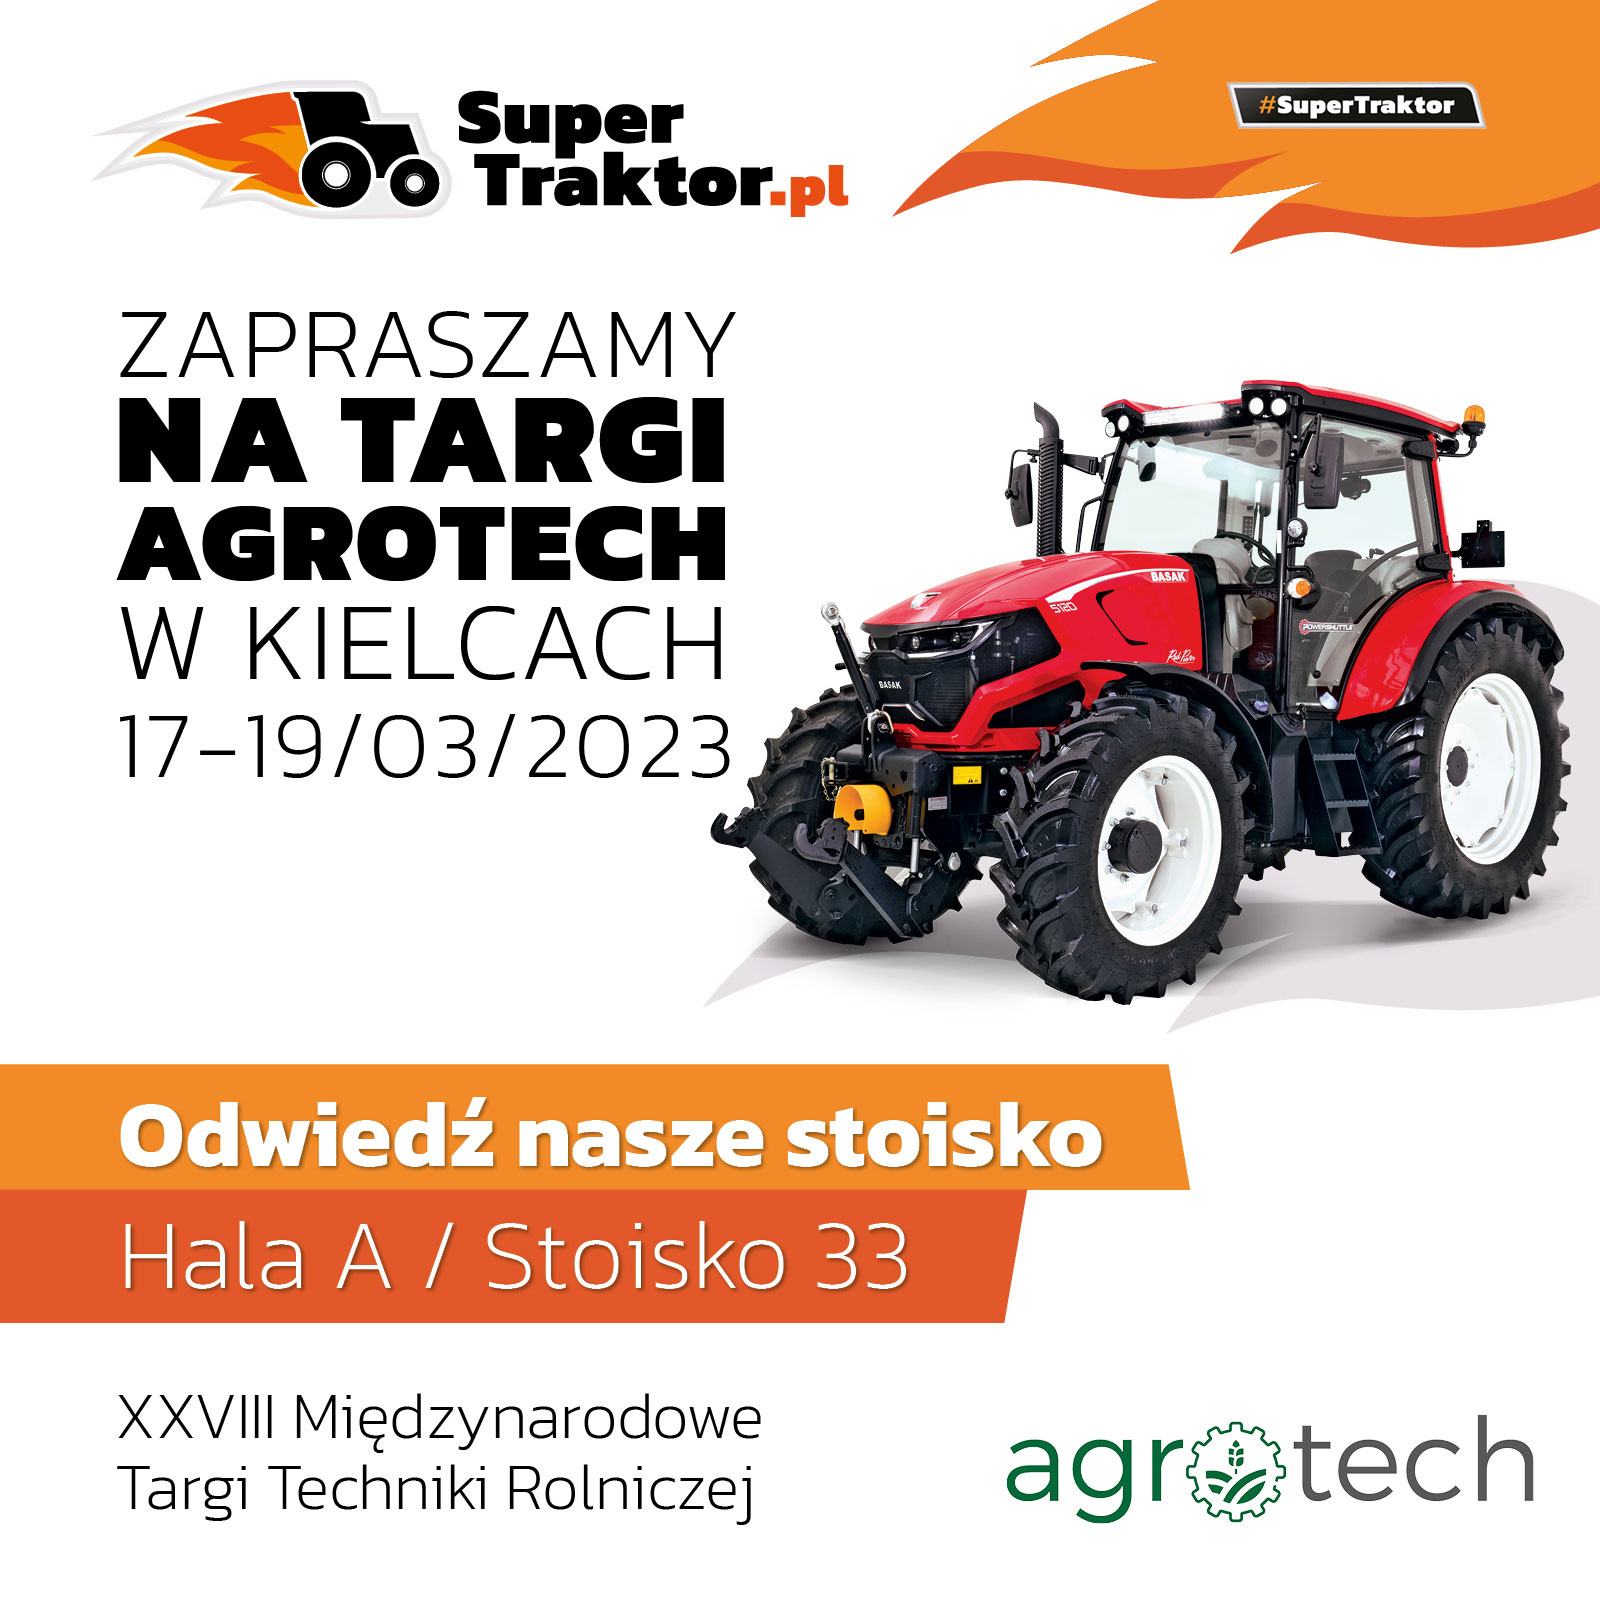 BASAK TRAKTOR z SuperTraktor.pl na AGROTECH 2023